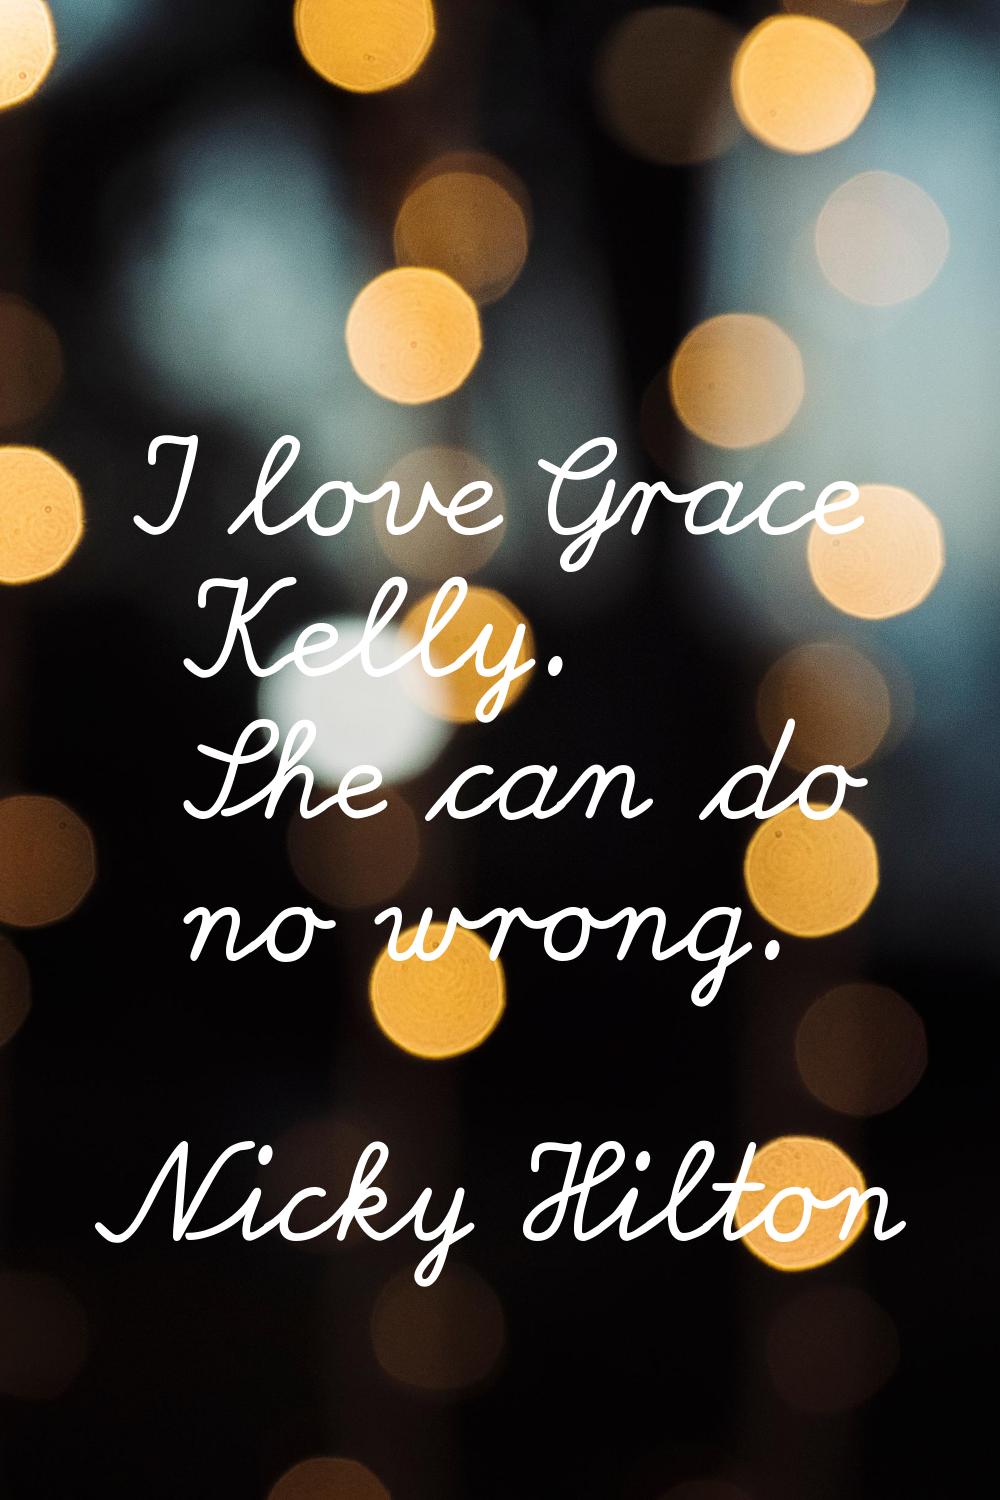 I love Grace Kelly. She can do no wrong.